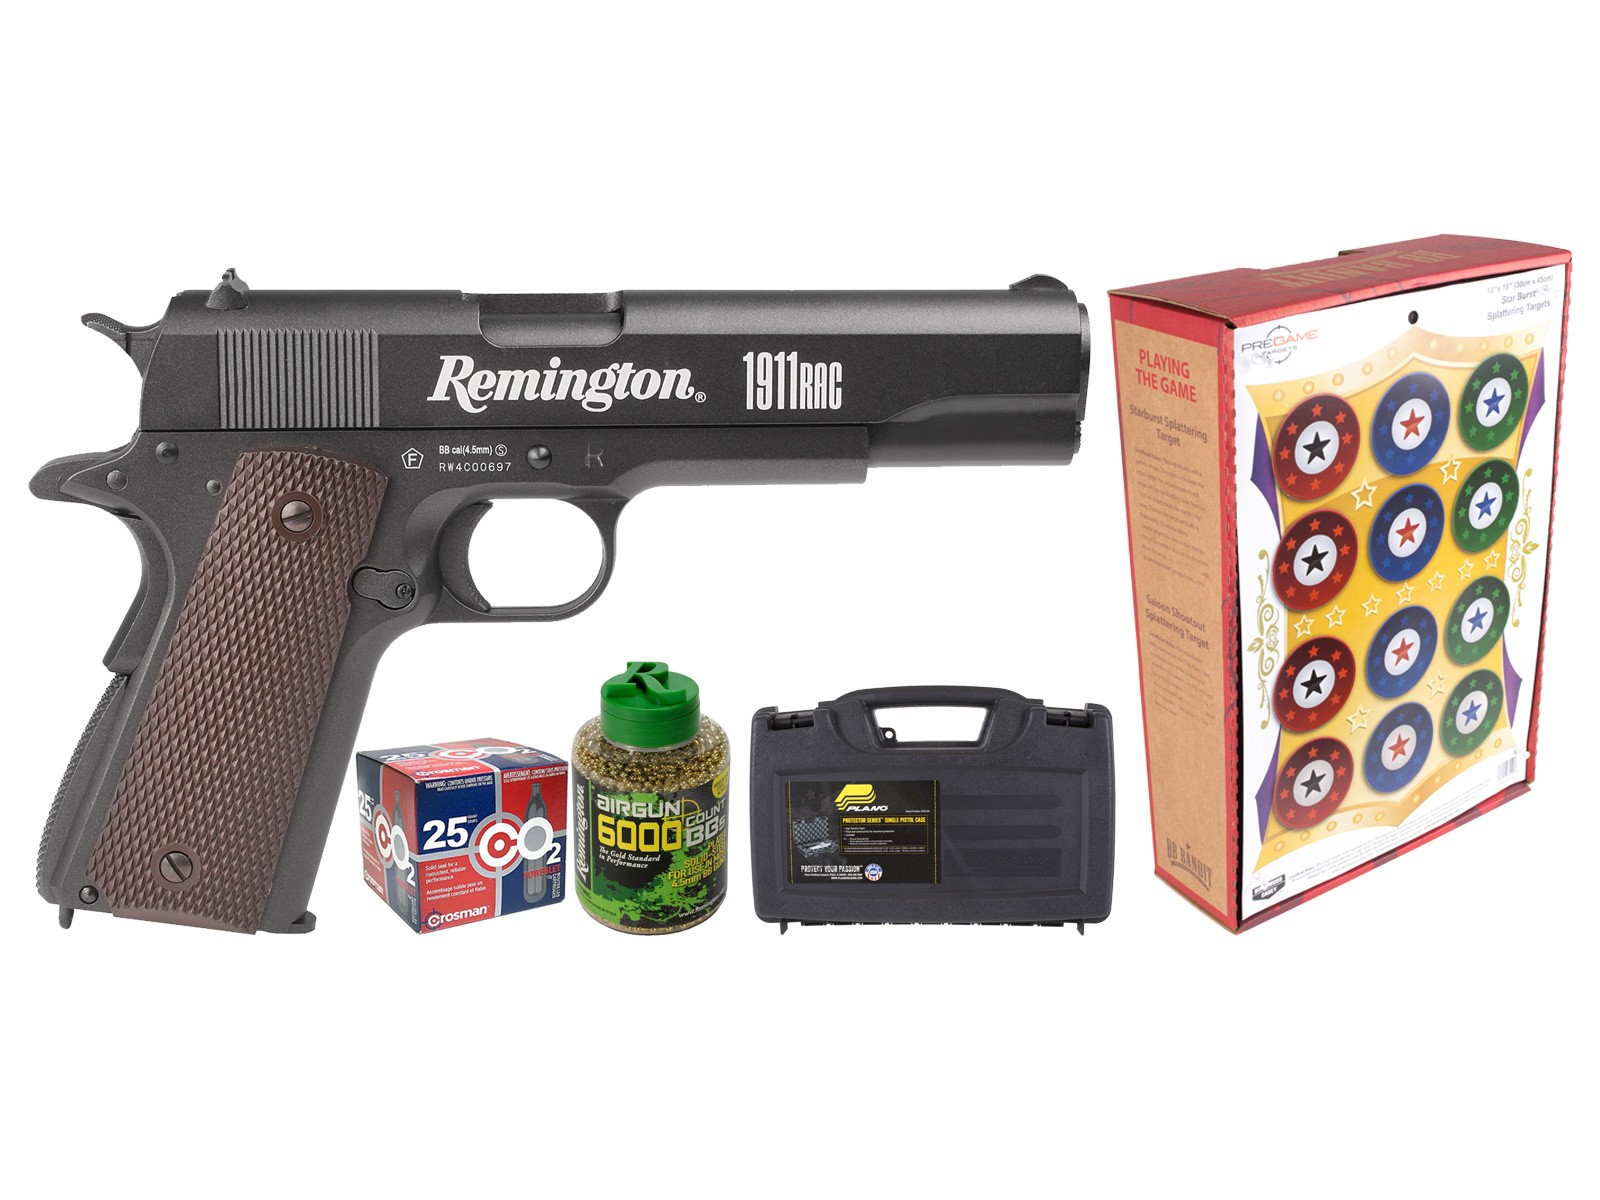 Remington 1911 RAC CO2 BB Pistol Kit